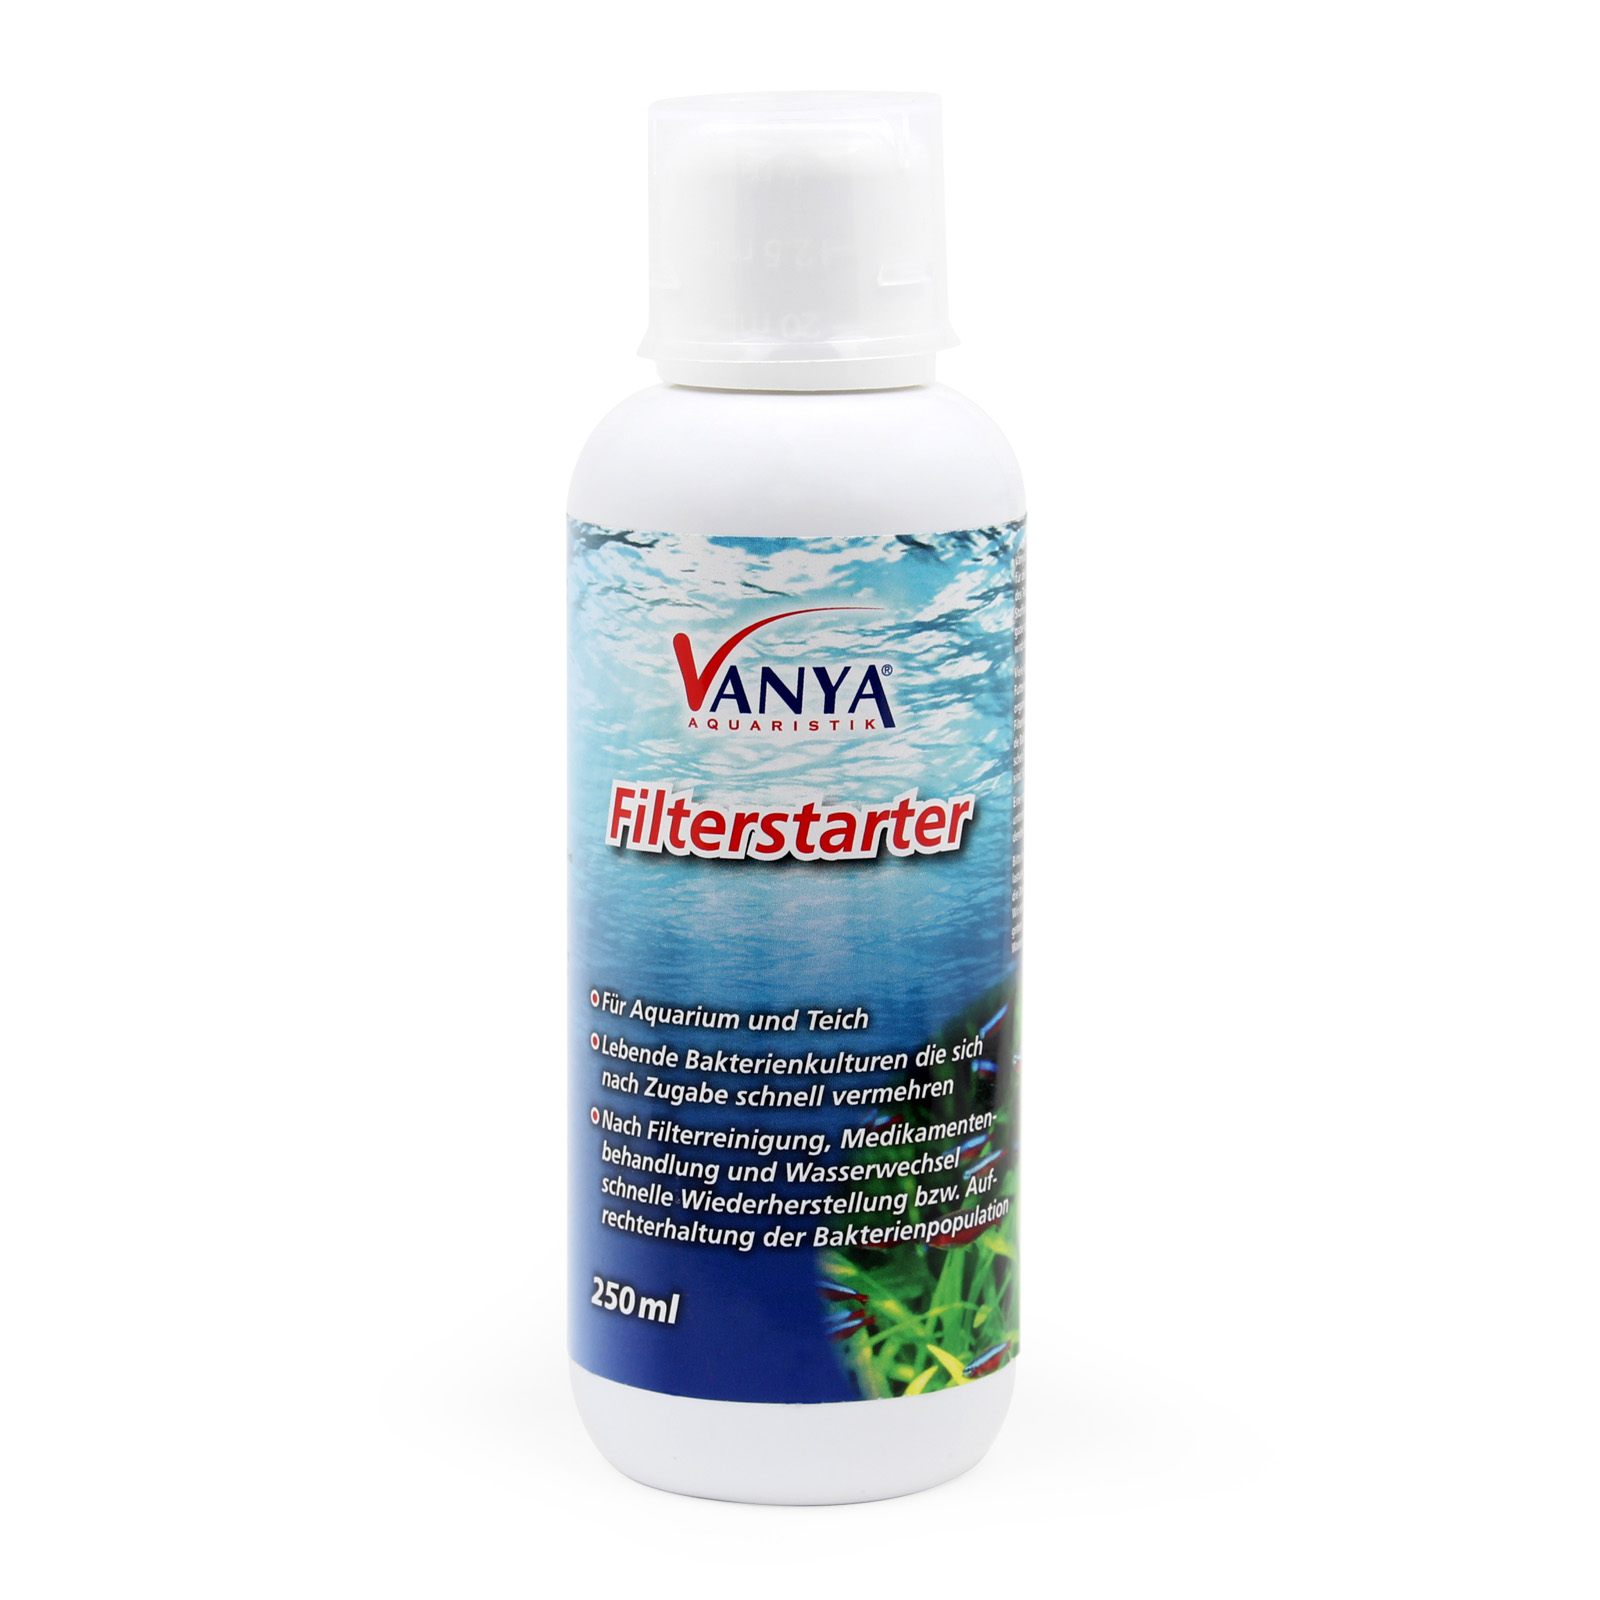 Vanya Filterstarter 250ml Biostarter Filterbakterien Süßwasser